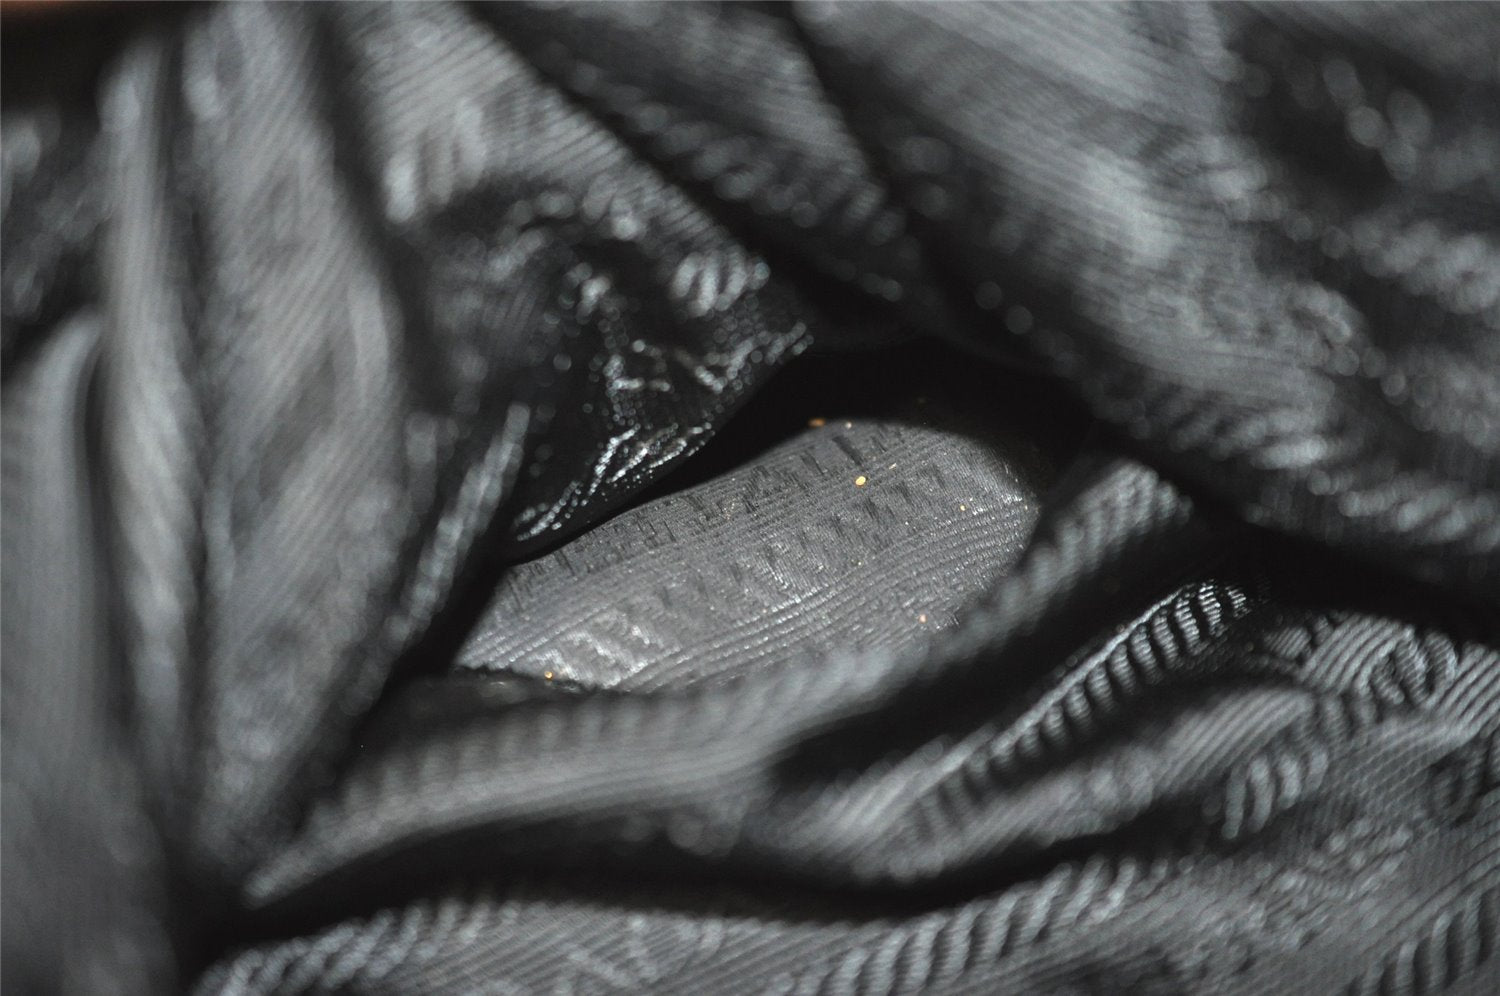 Authentic PRADA Vintage Nylon Tessuto Shoulder Hand Bag Purse Black 2205I